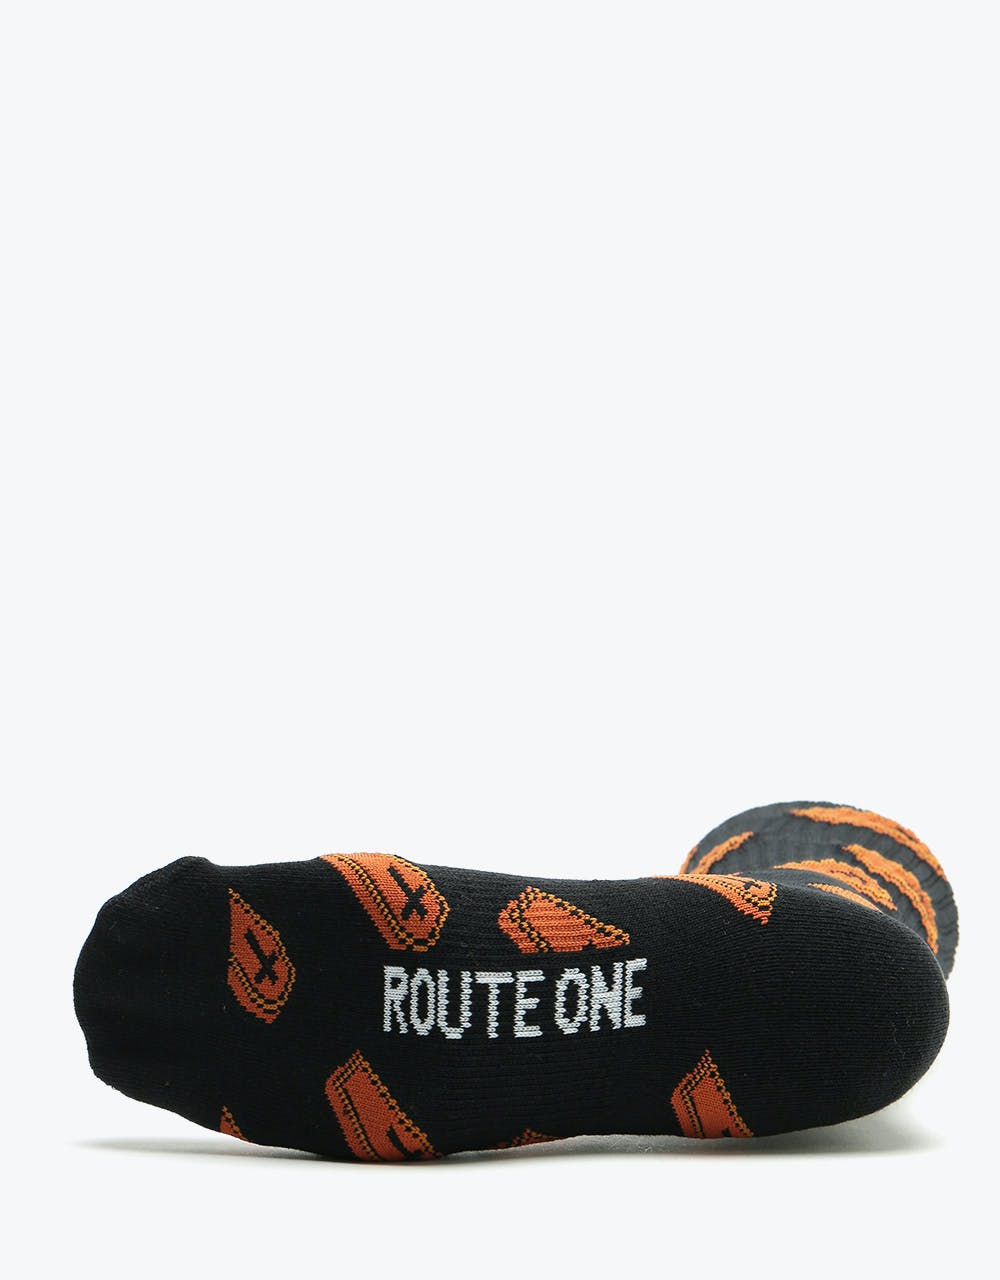 Route One Coffin Socks - Black